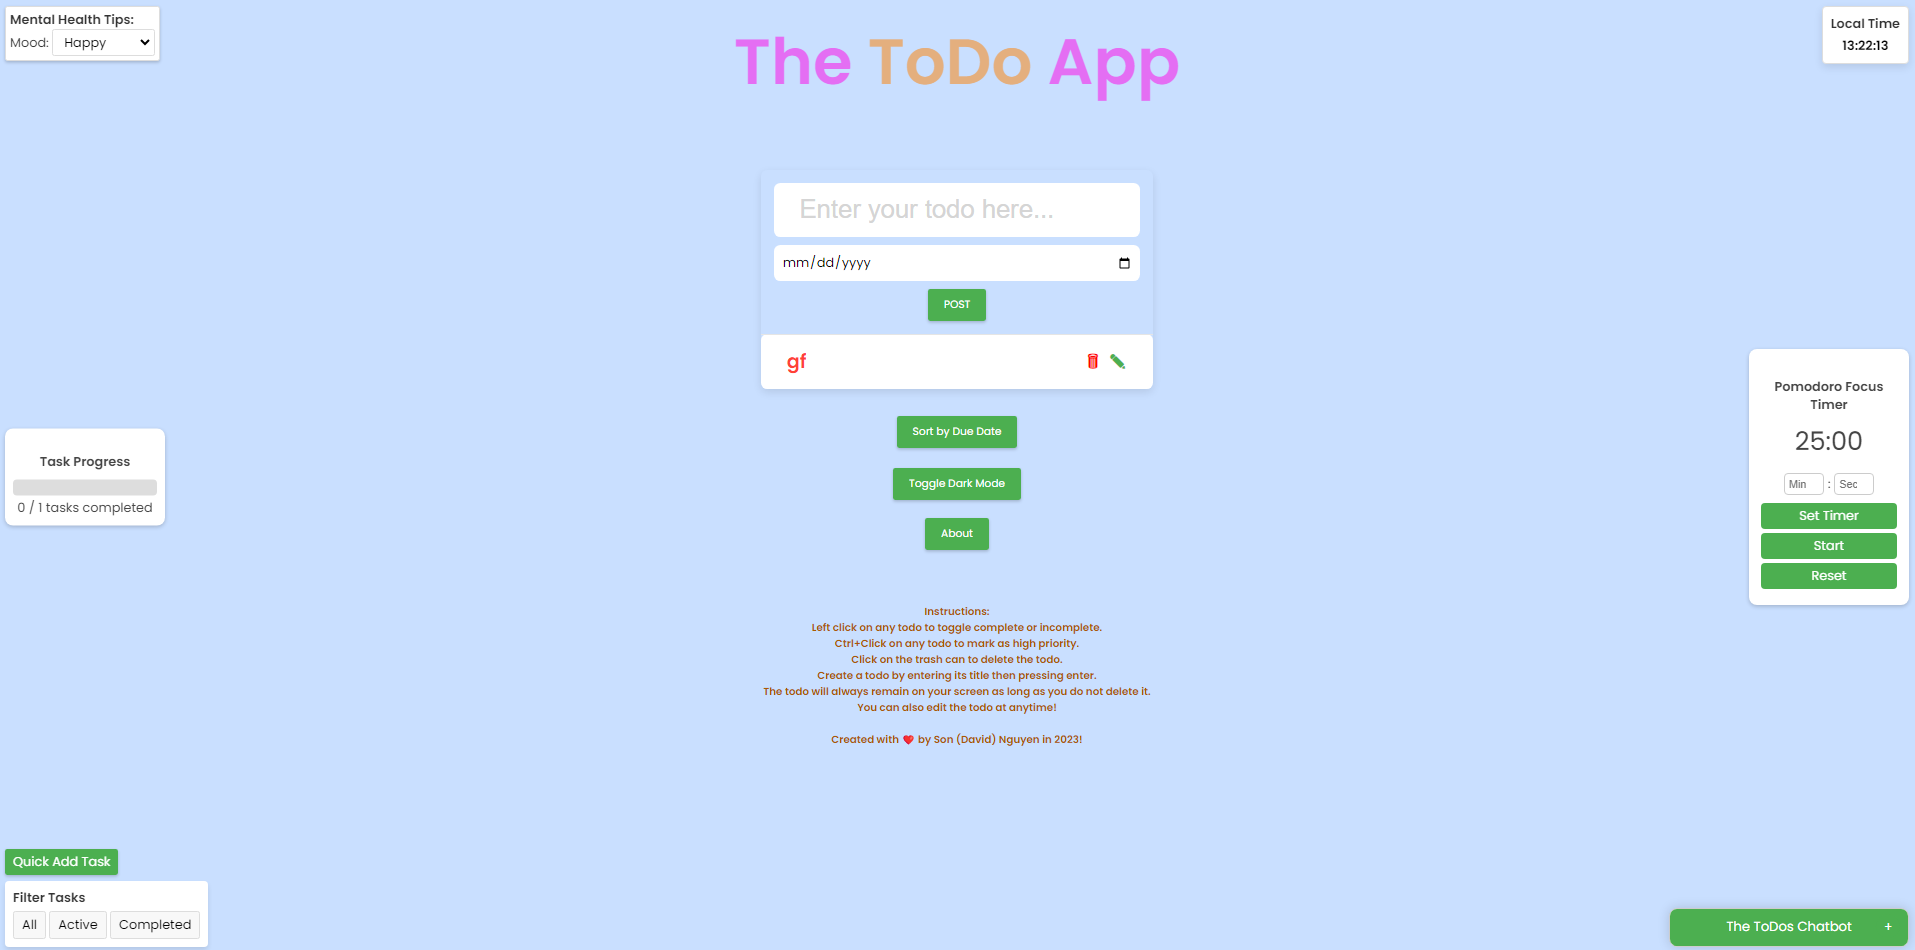 The ToDo App Interface